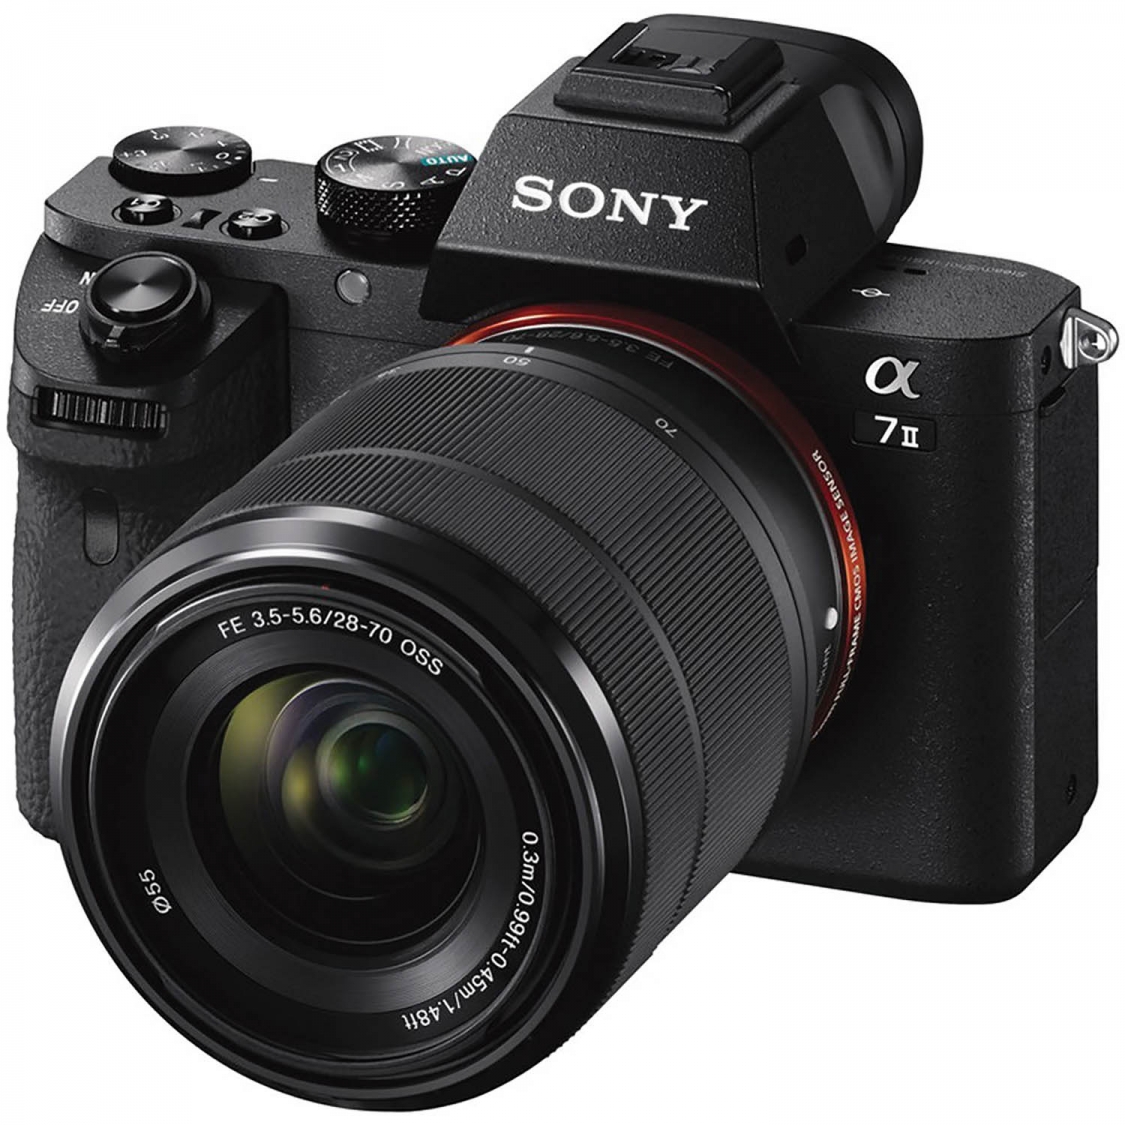 Sony Alpha A7 II with 28-70mm OSS Lens